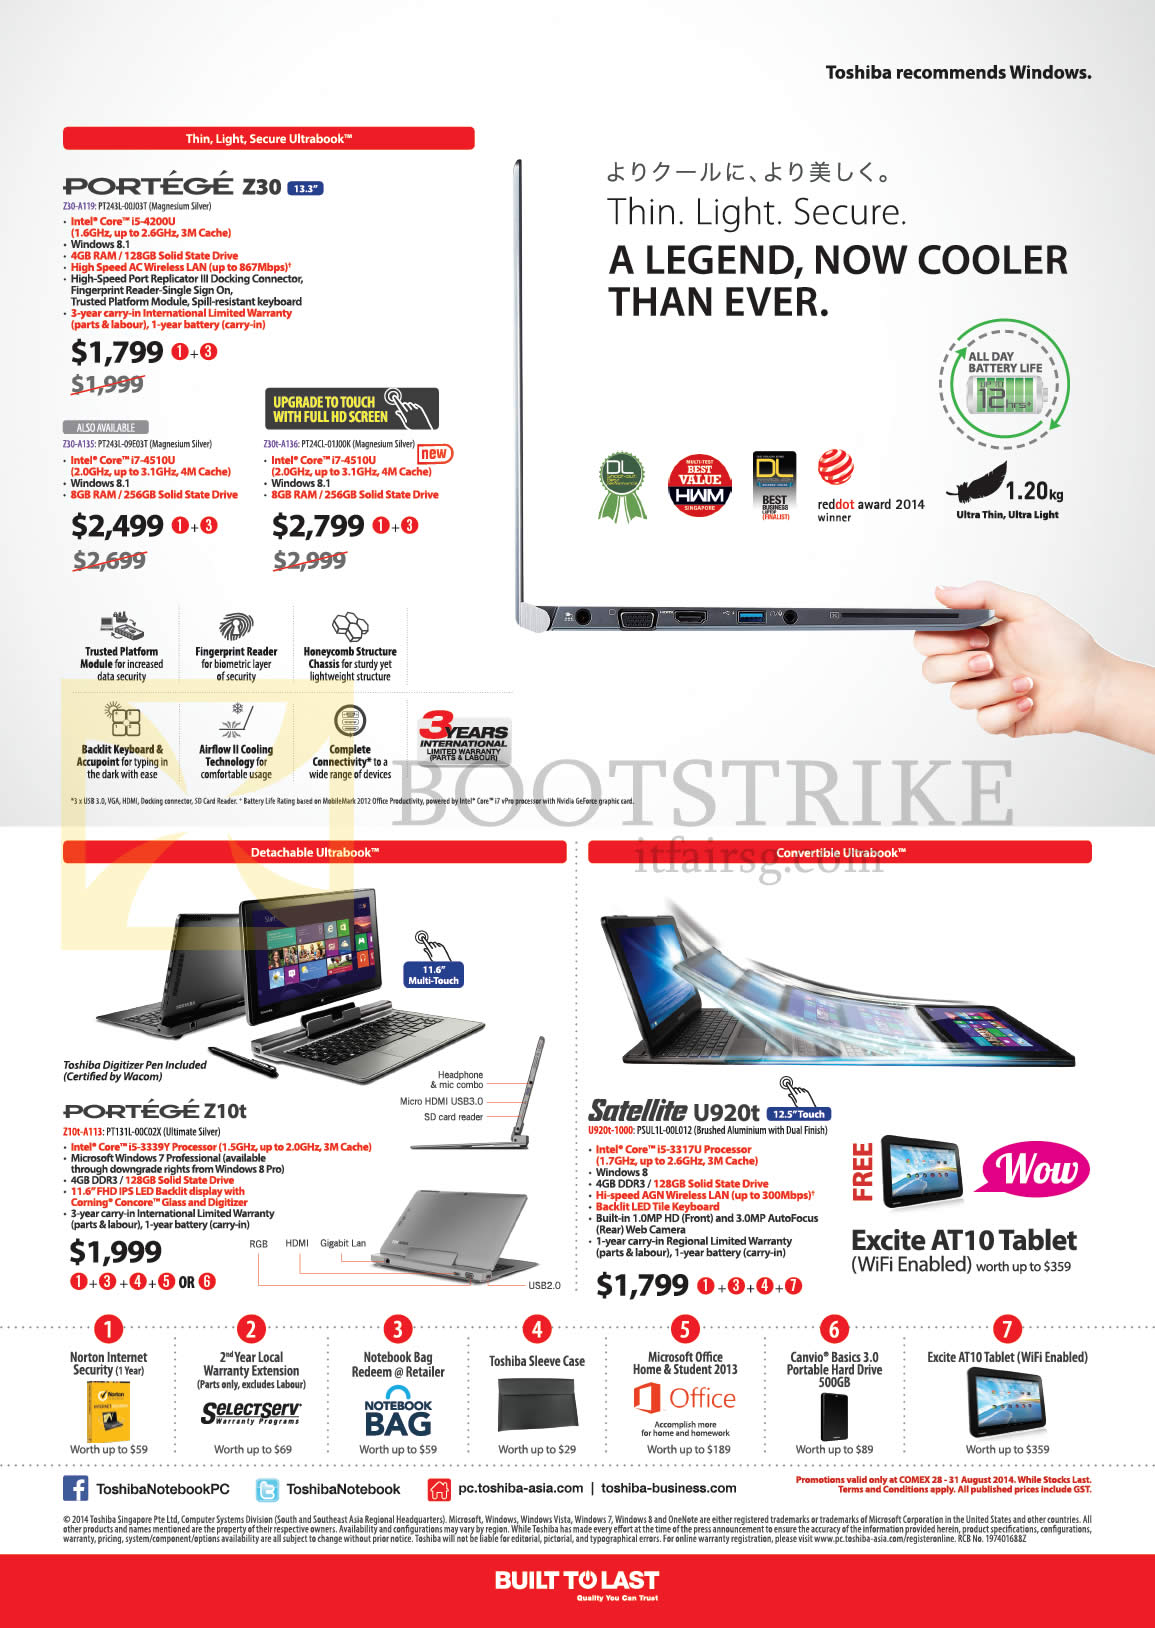 COMEX 2014 price list image brochure of Toshiba Notebooks Portege Z30, Z10t, Satellite U920t, Excite AT10 Tablet